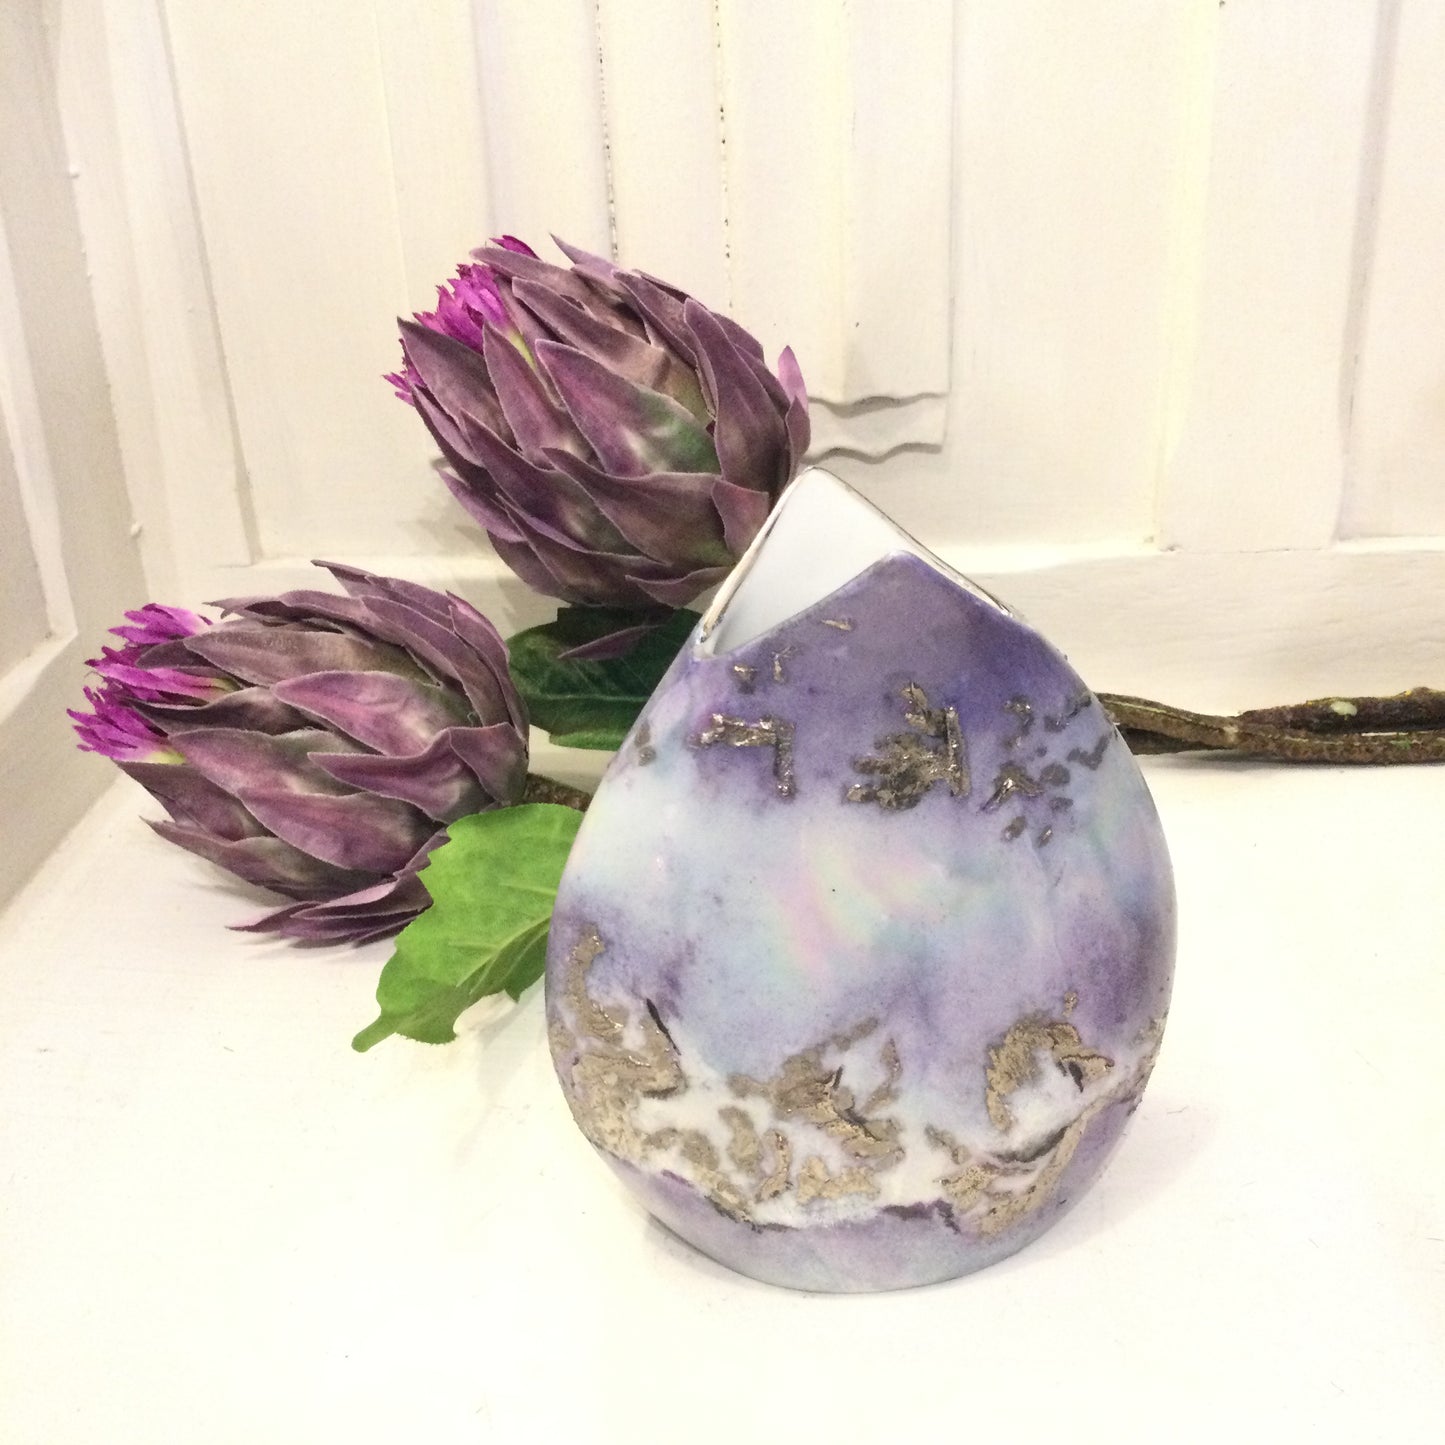 Abstrakt vase i lyseblå og lilla.